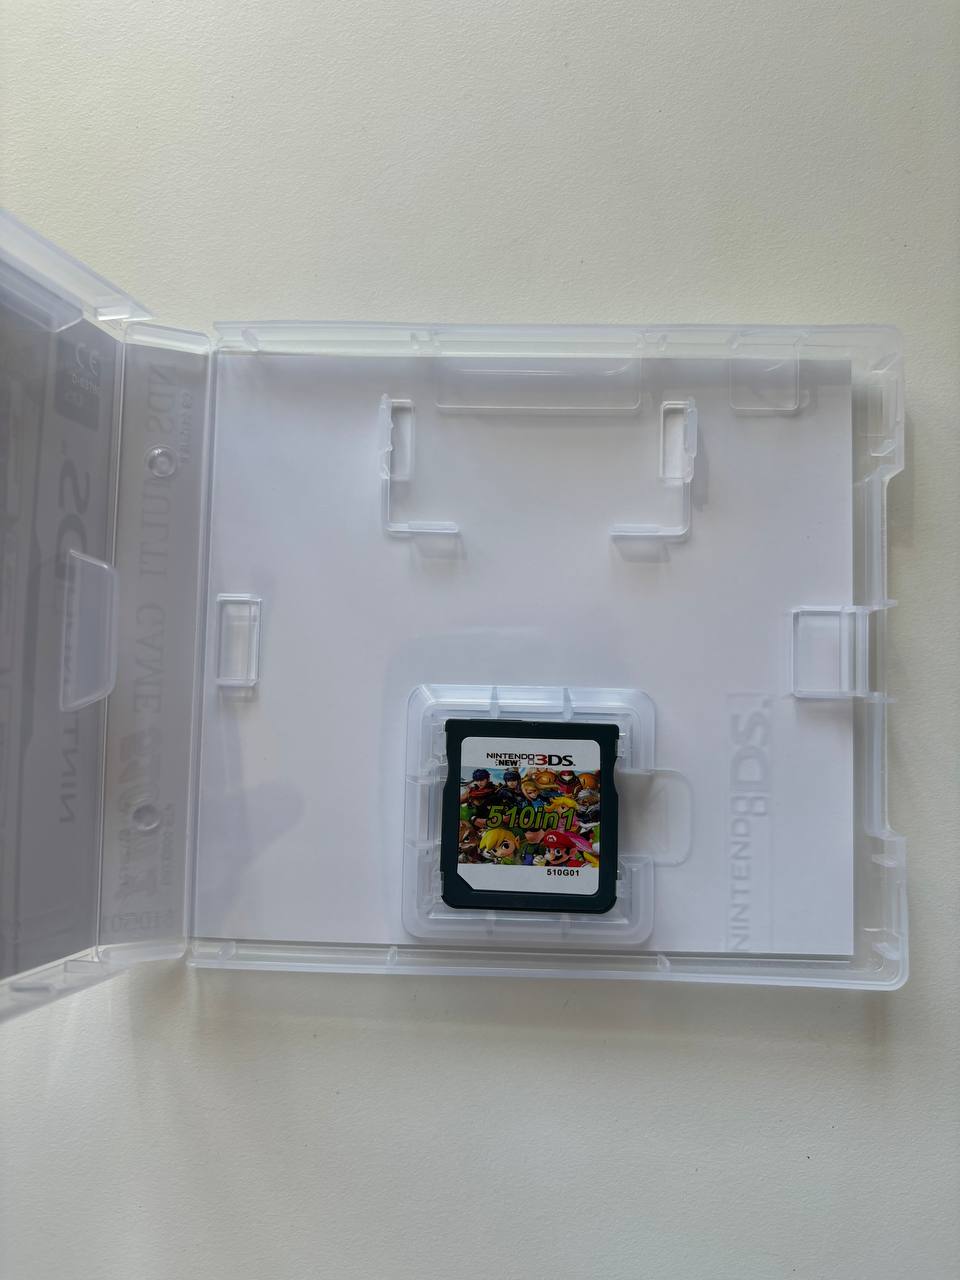 Multi Game 510 in 1 Nintendo DS 3DS